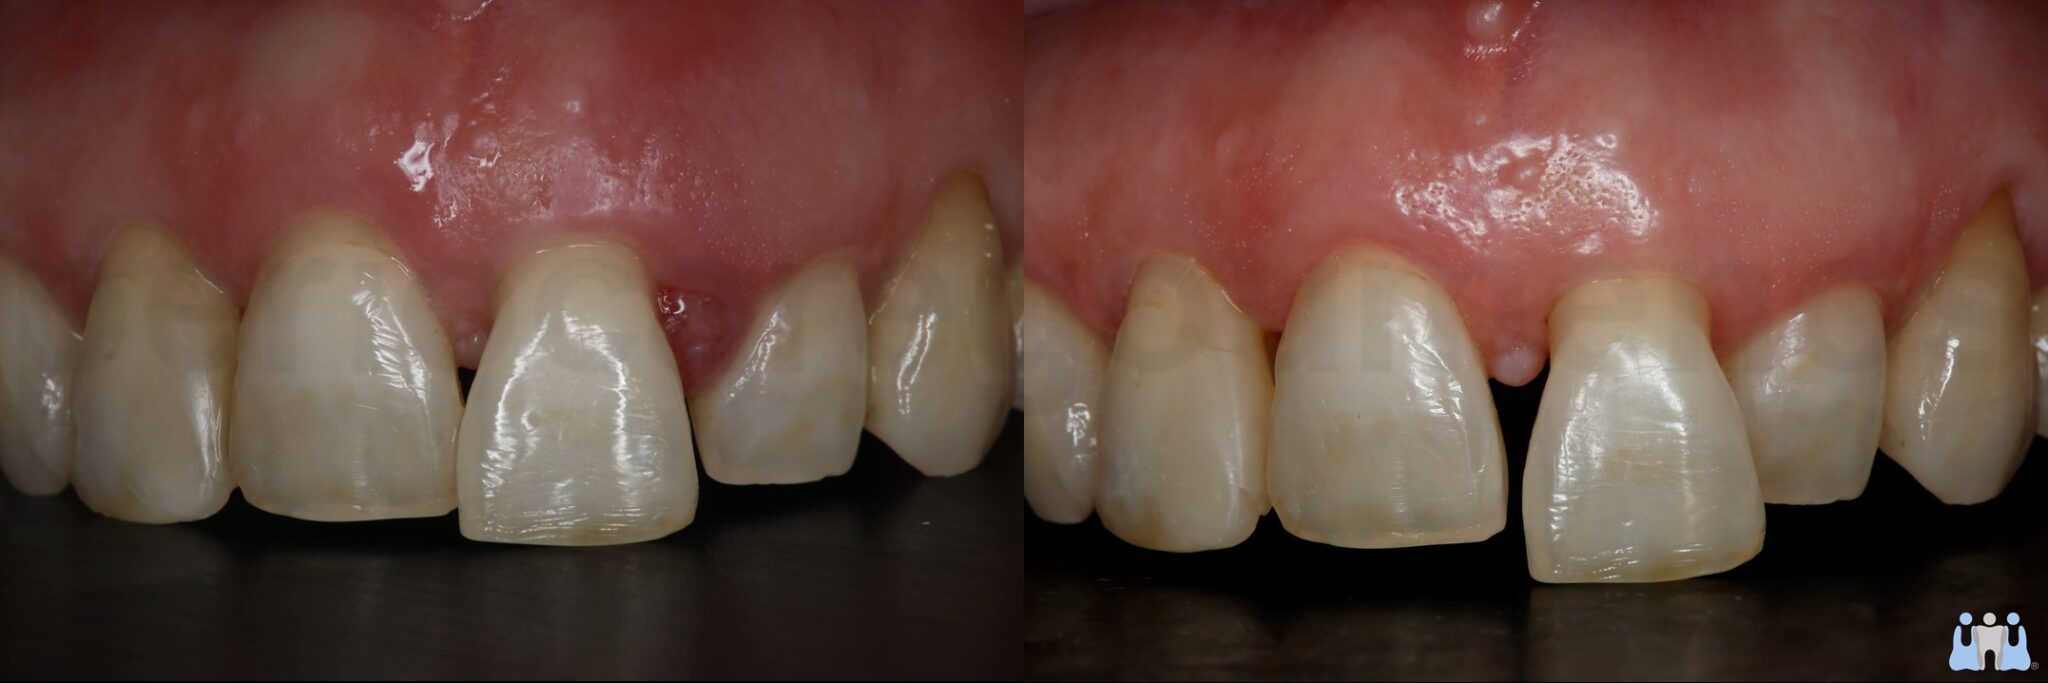 Contemporary periodontal treatment